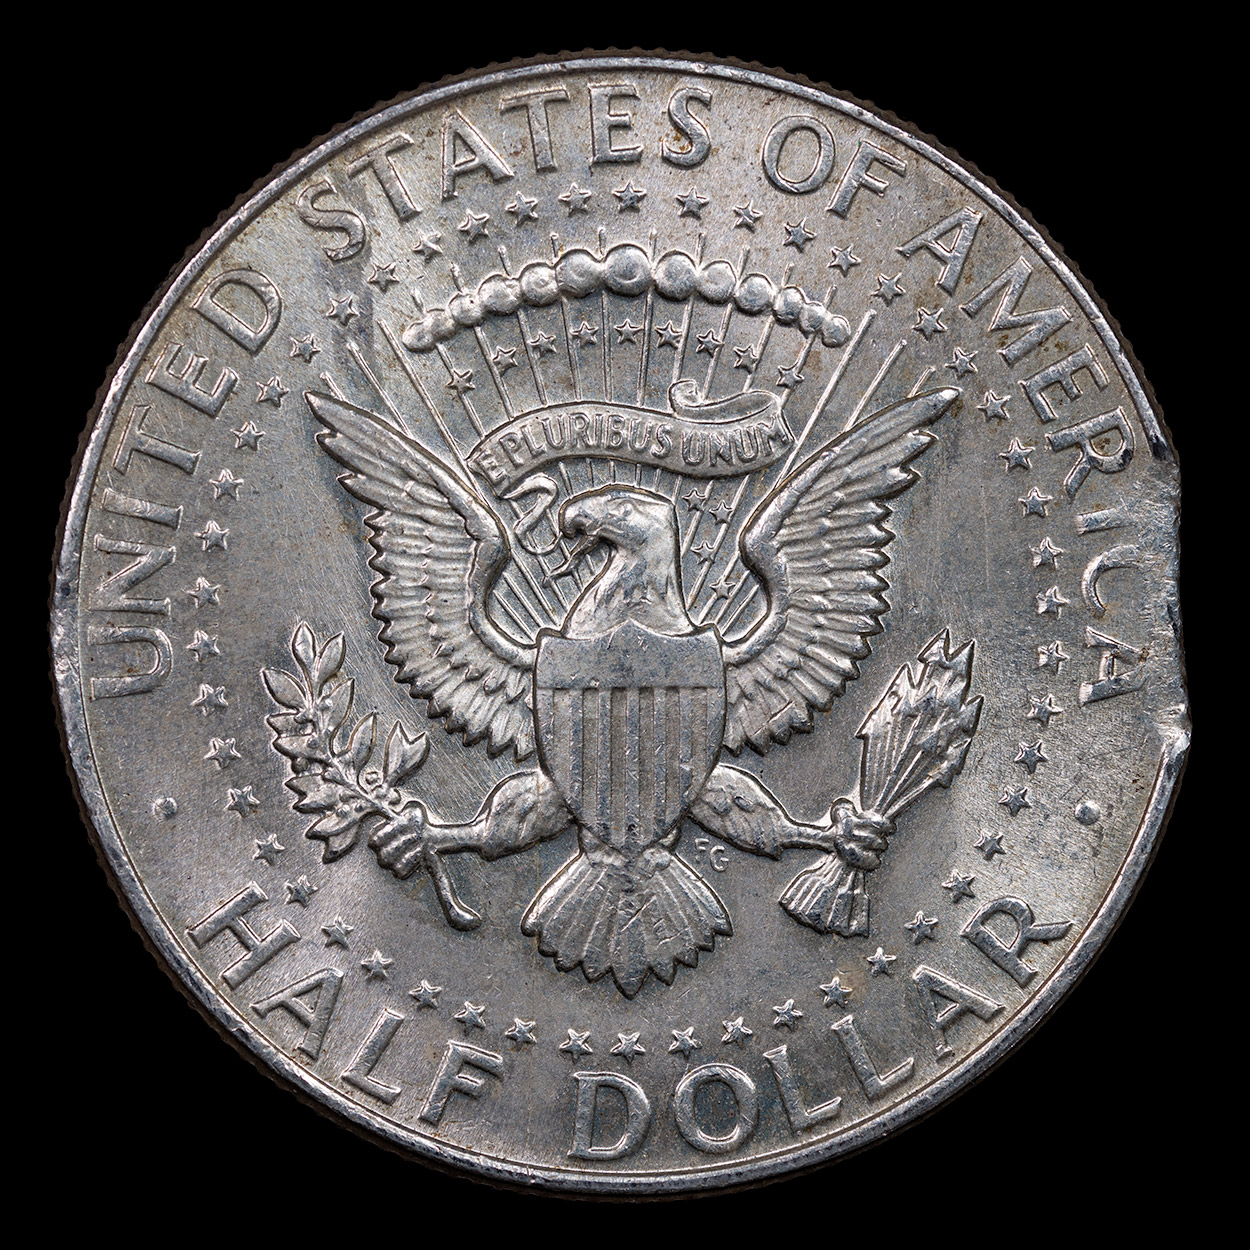 1964-Kennedy-Half-Dollar-Clipped-Planchet-Reverse.jpg